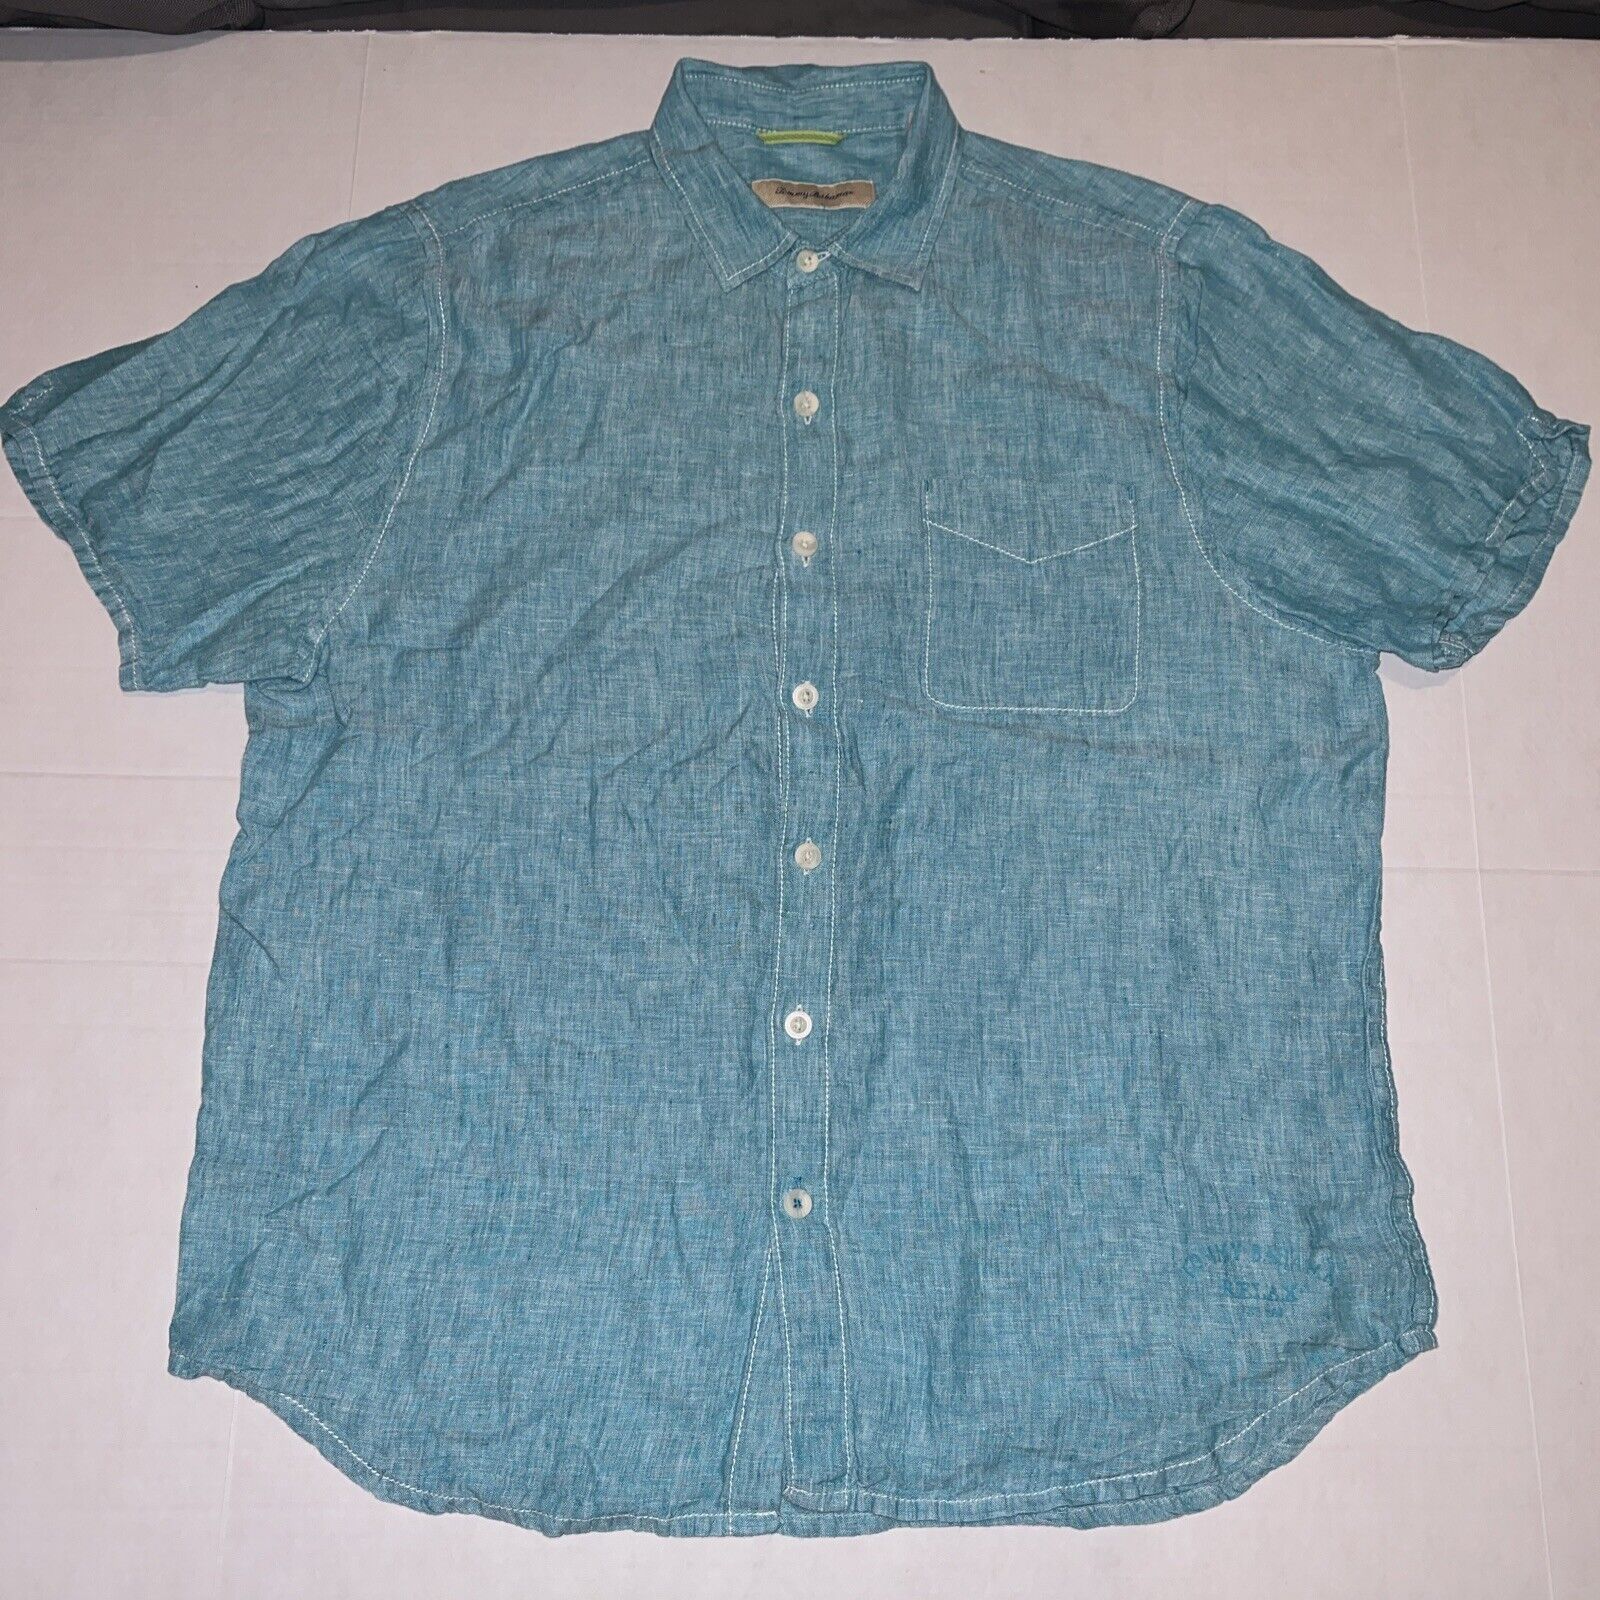 NWOT Tommy Bahama Hawaiian Aloha Adult Large Pocket Shirt Aqua Blue 100% Linen